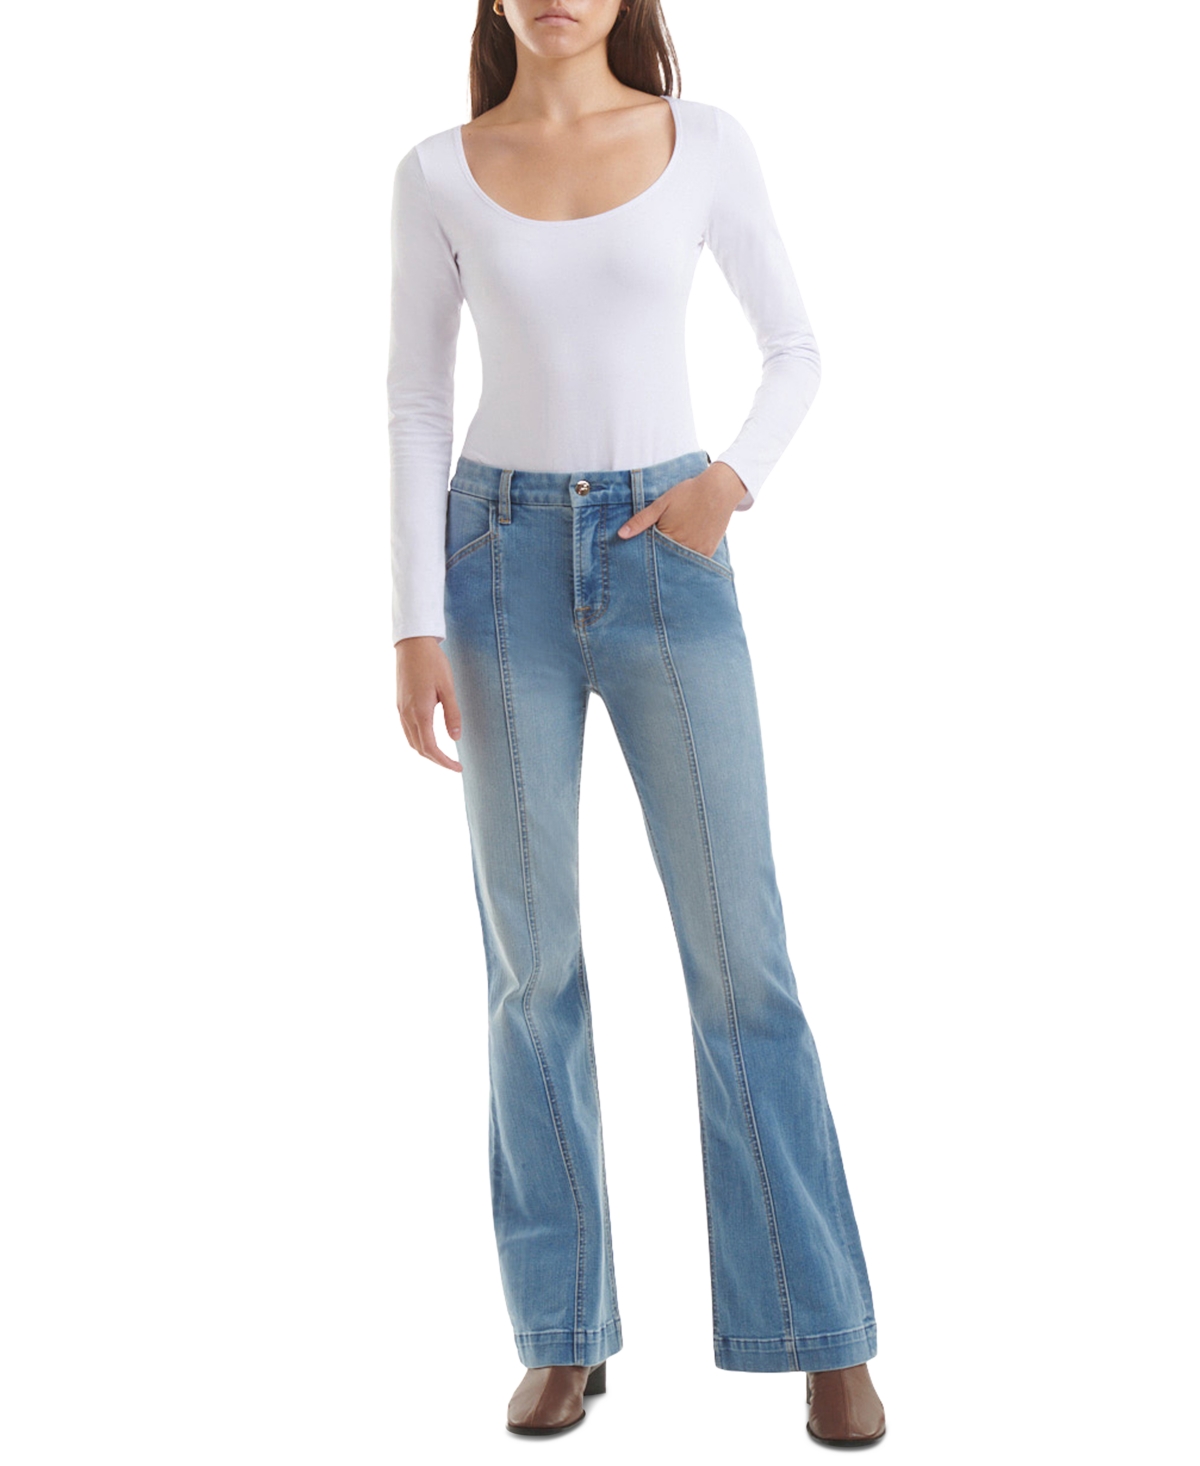 JEN7 by 7 For All Mankind Women's Pintuck Seamed Flare-Leg Jeans